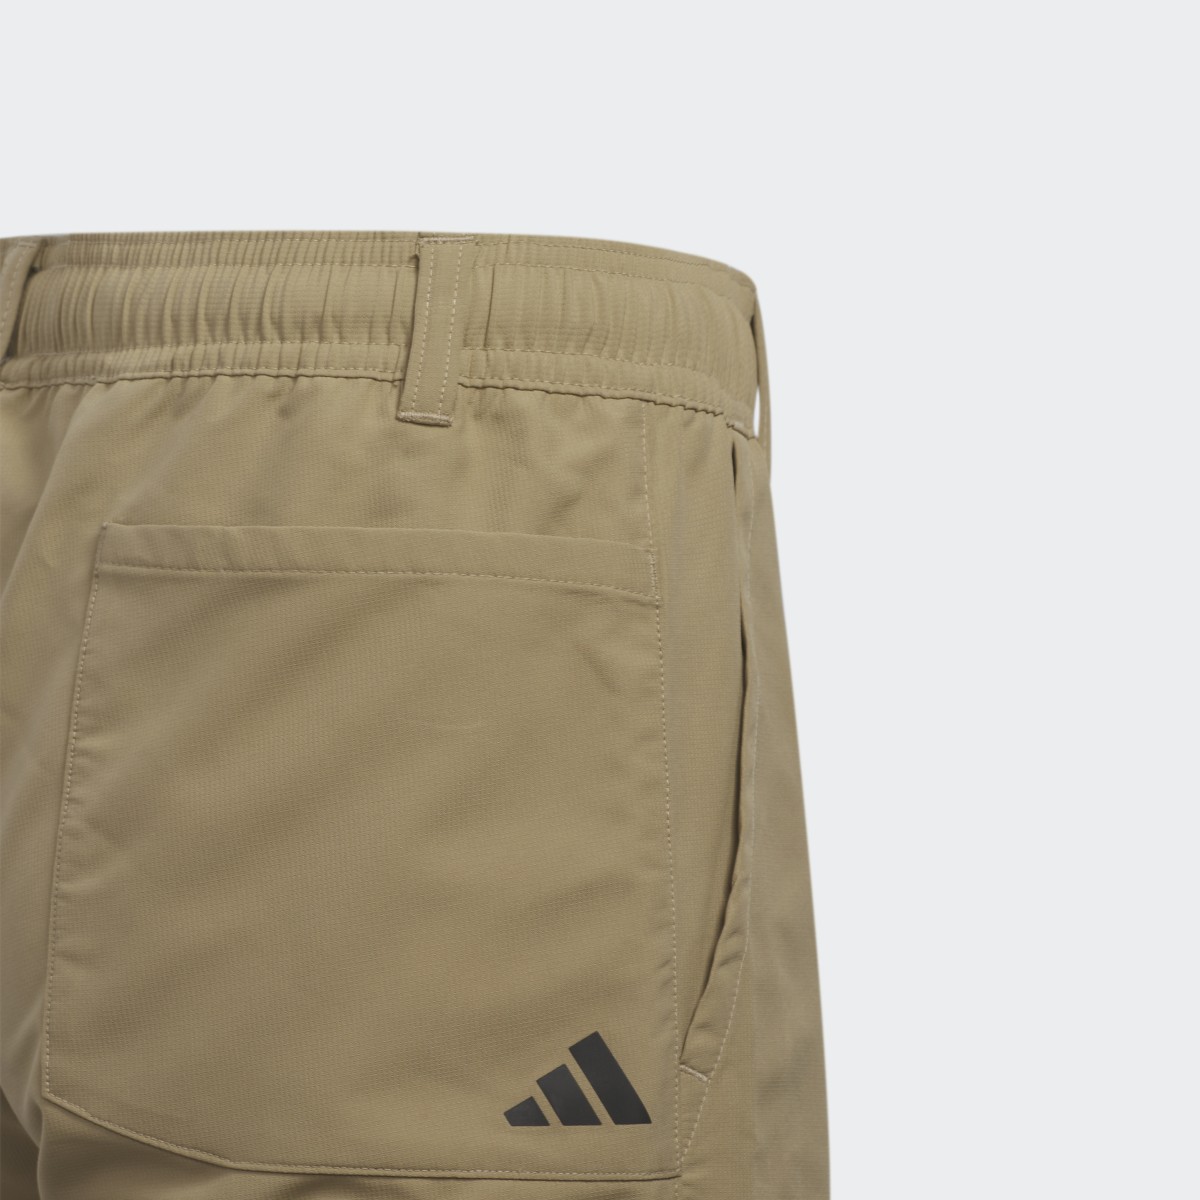 Adidas Versatile Pull-on Shorts. 5